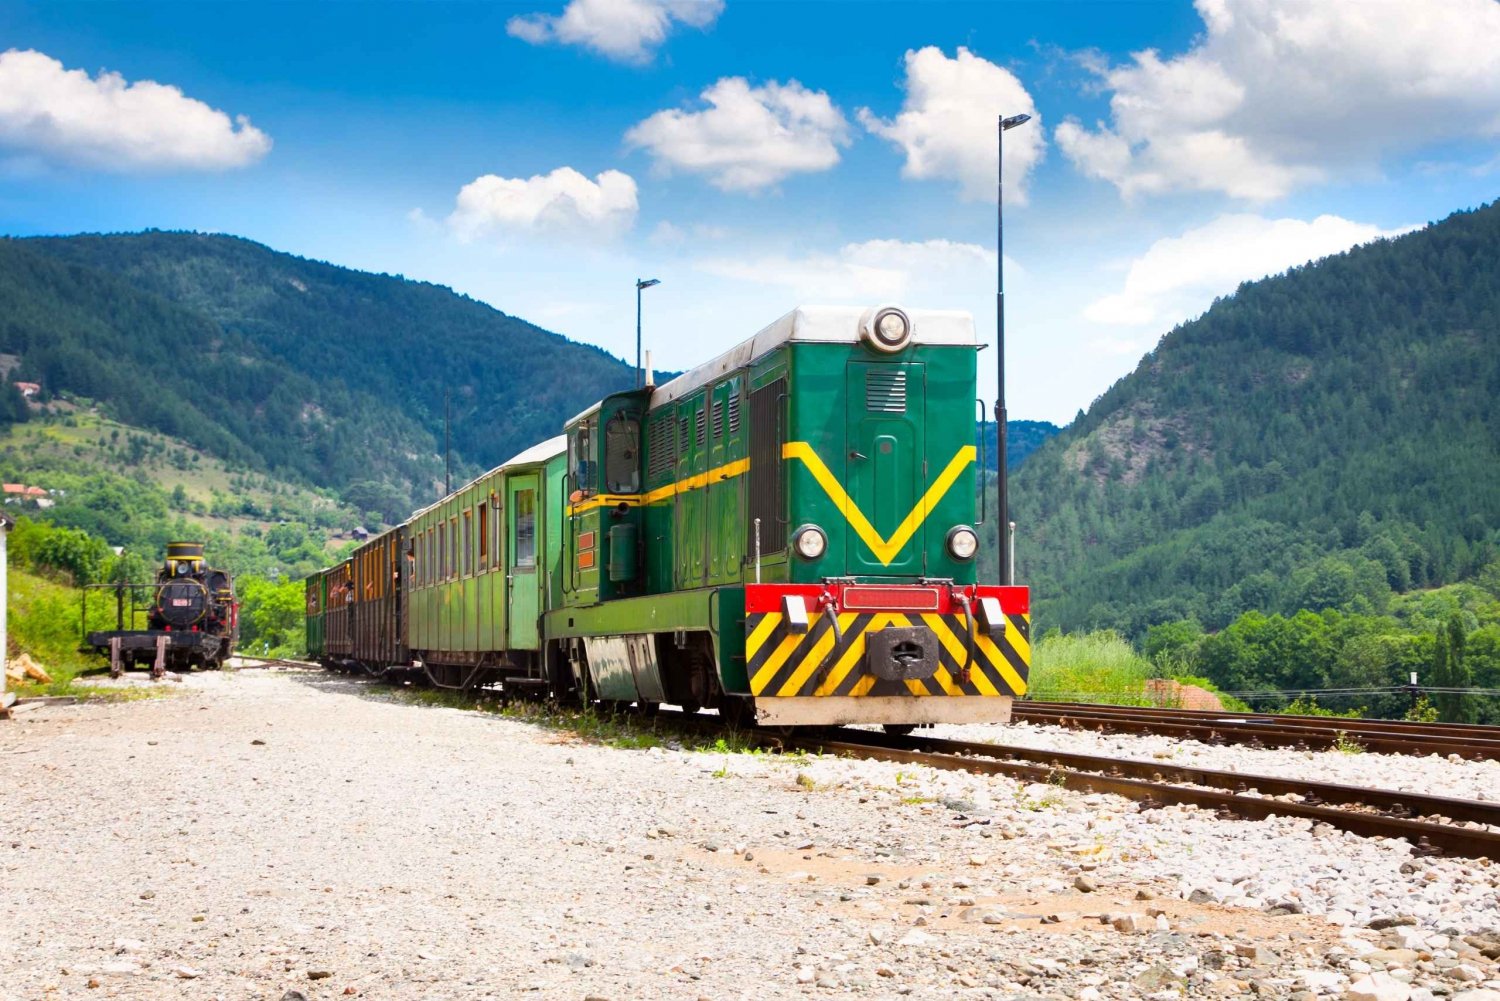 Sargan Eight railroad train ride & Tara mountain